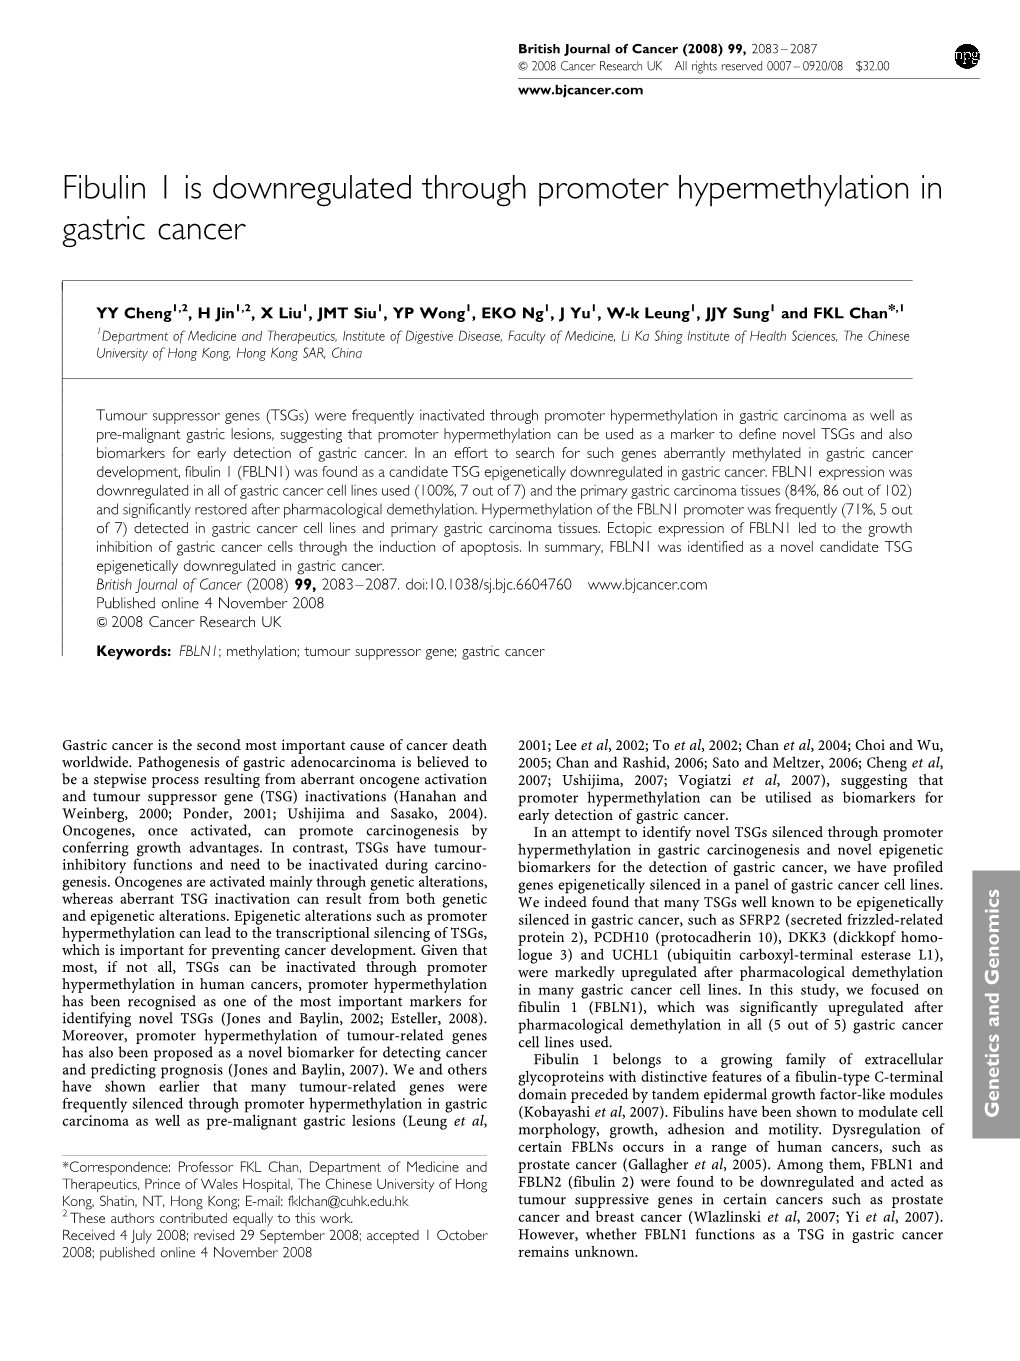 Fibulin 1 Is Downregulated Through Promoter Hypermethylation in Gastric Cancer